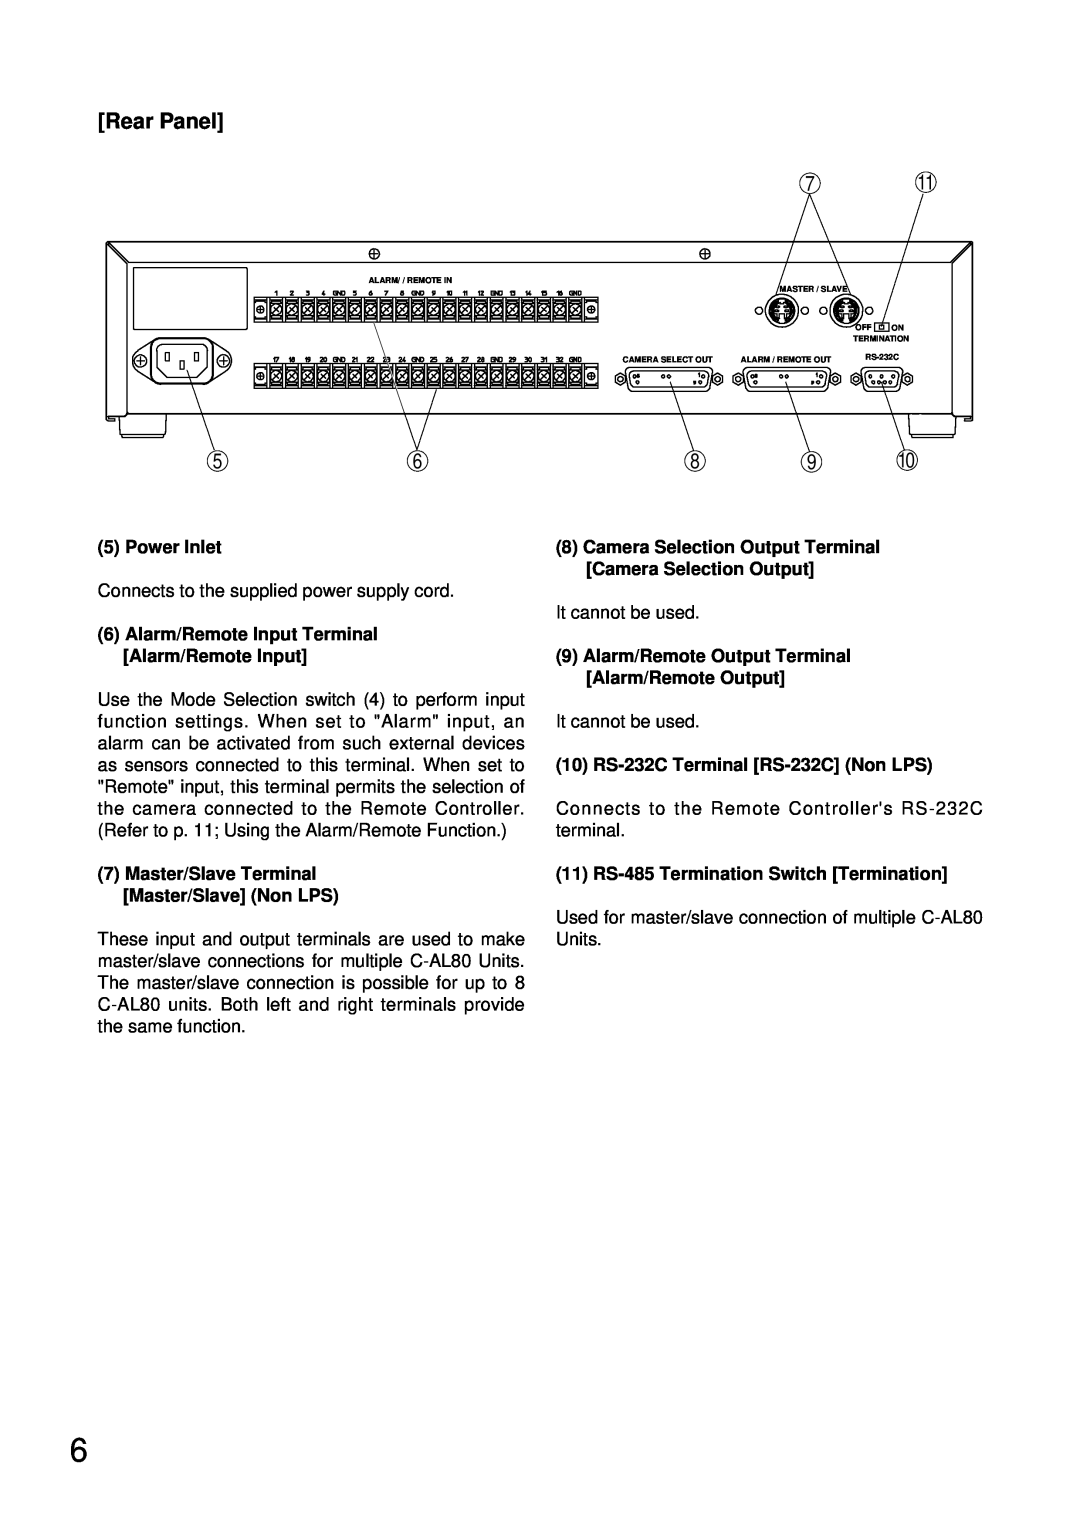 TOA Electronics C-AL80(L) Power Inlet, 6Alarm/Remote Input Terminal Alarm/Remote Input, 10 RS-232CTerminal RS-232CNon LPS 